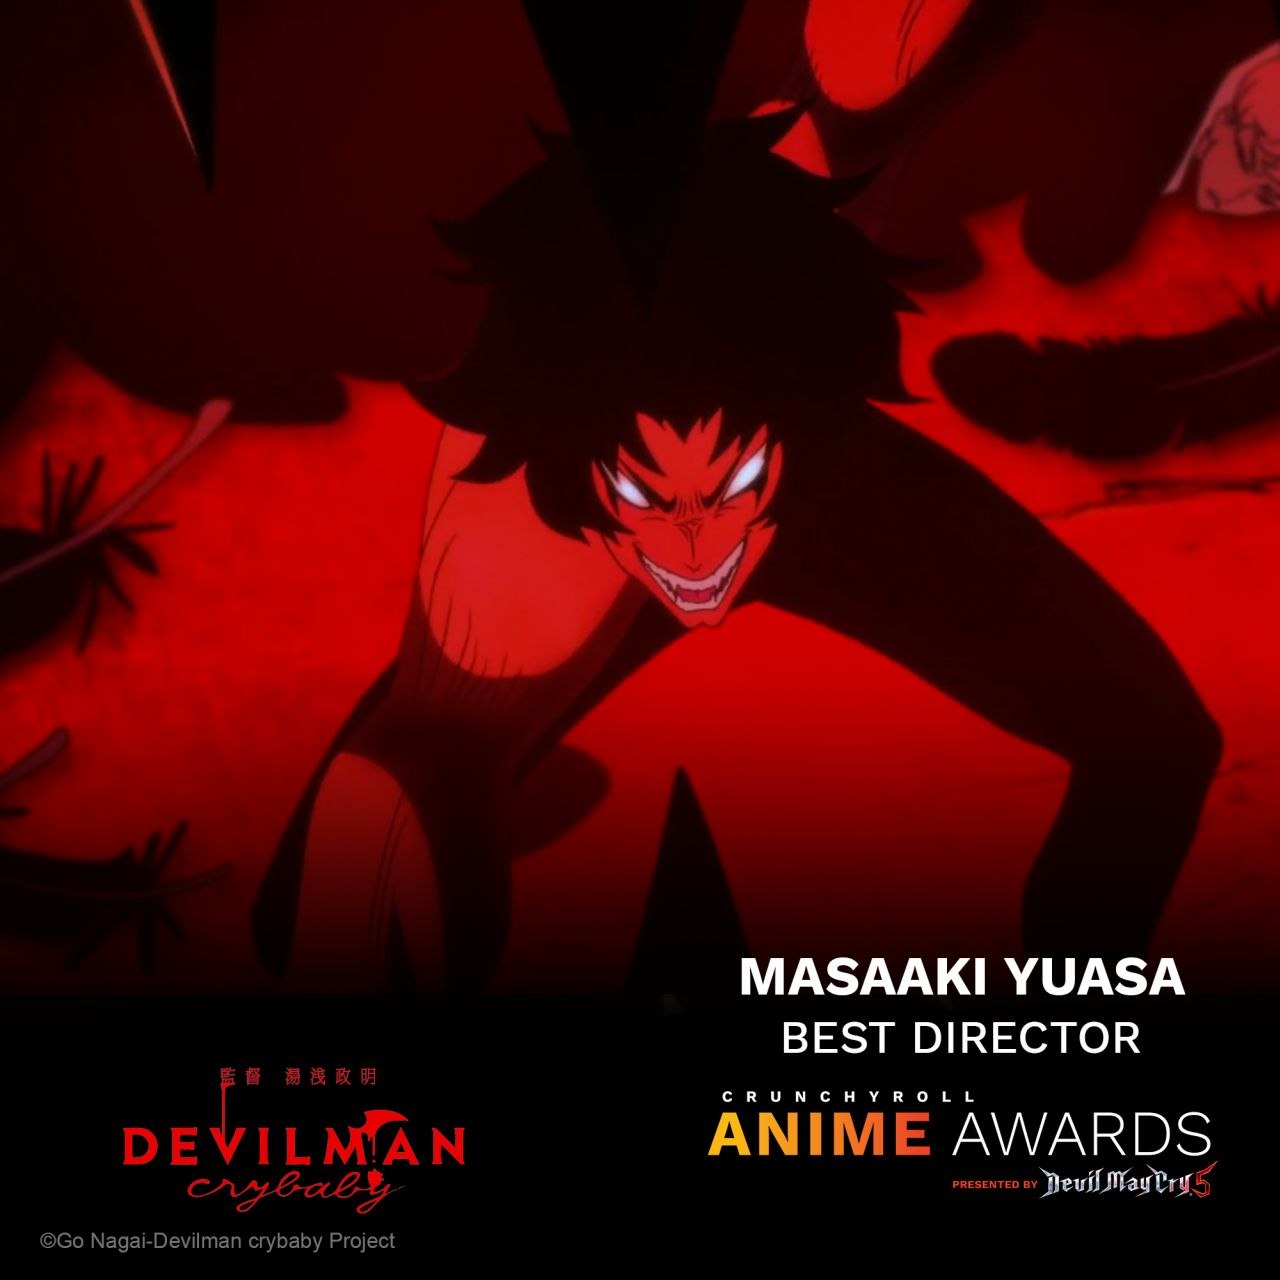 Masaaki Yuasa Devilman Crybaby Take Top Crunchyroll Anime Award Honors Animation World Network